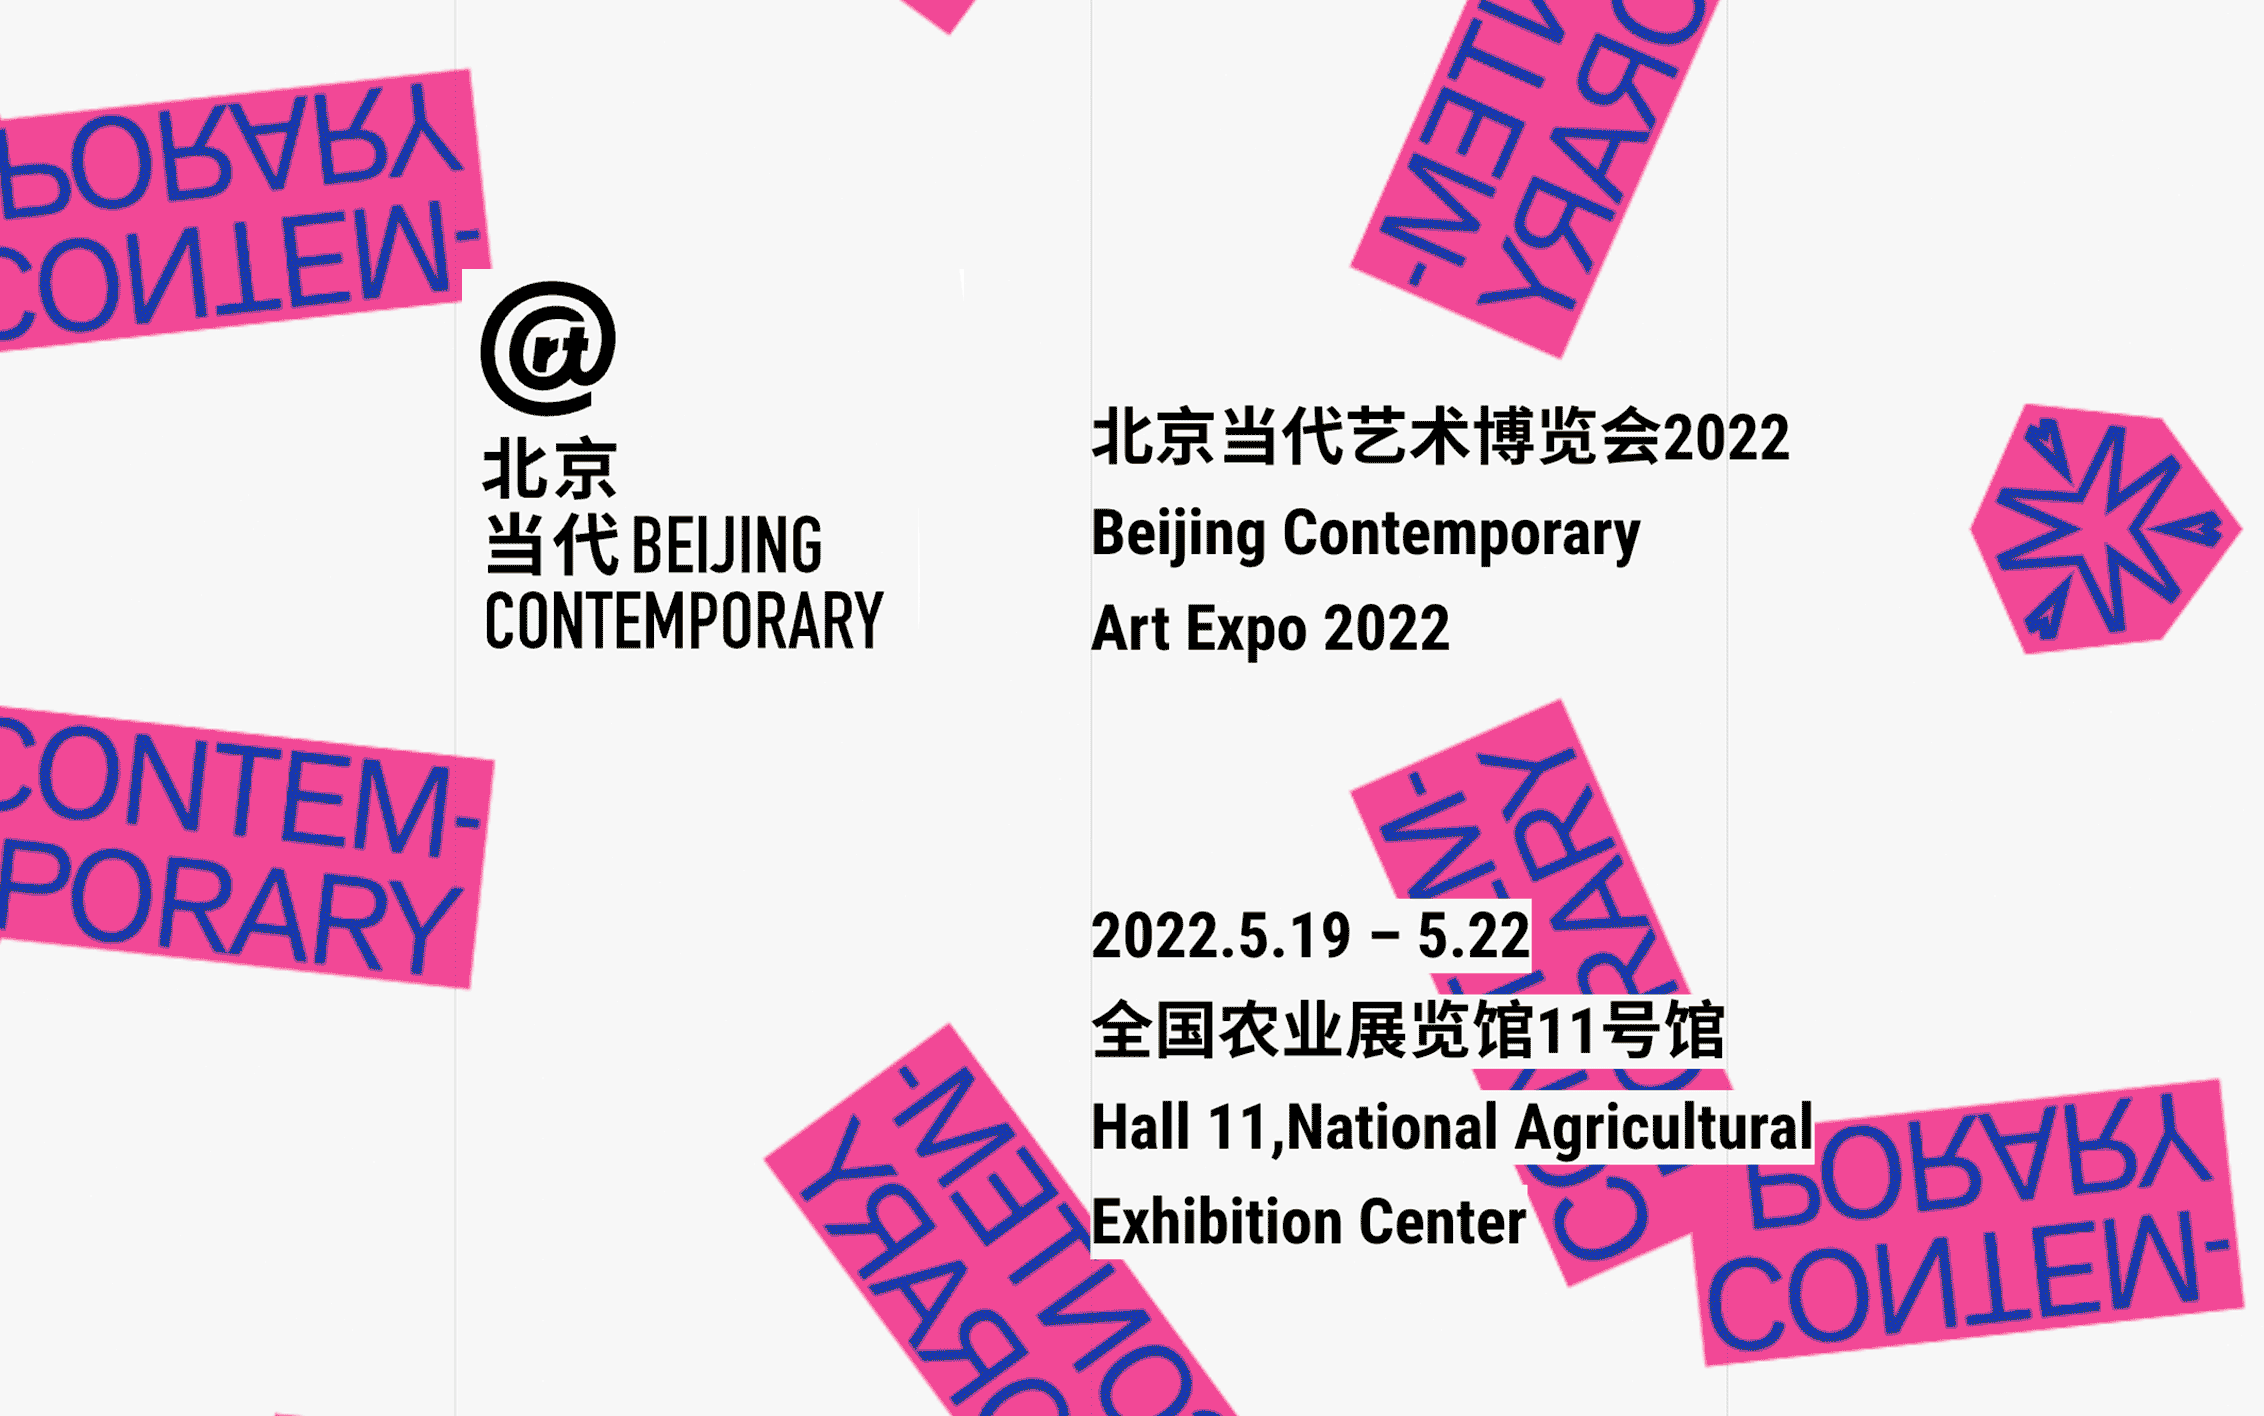 Contemporary art art fair, Beijing Contemporary Art Expo 2022 at Whitestone Gallery, Taipei, Taiwan